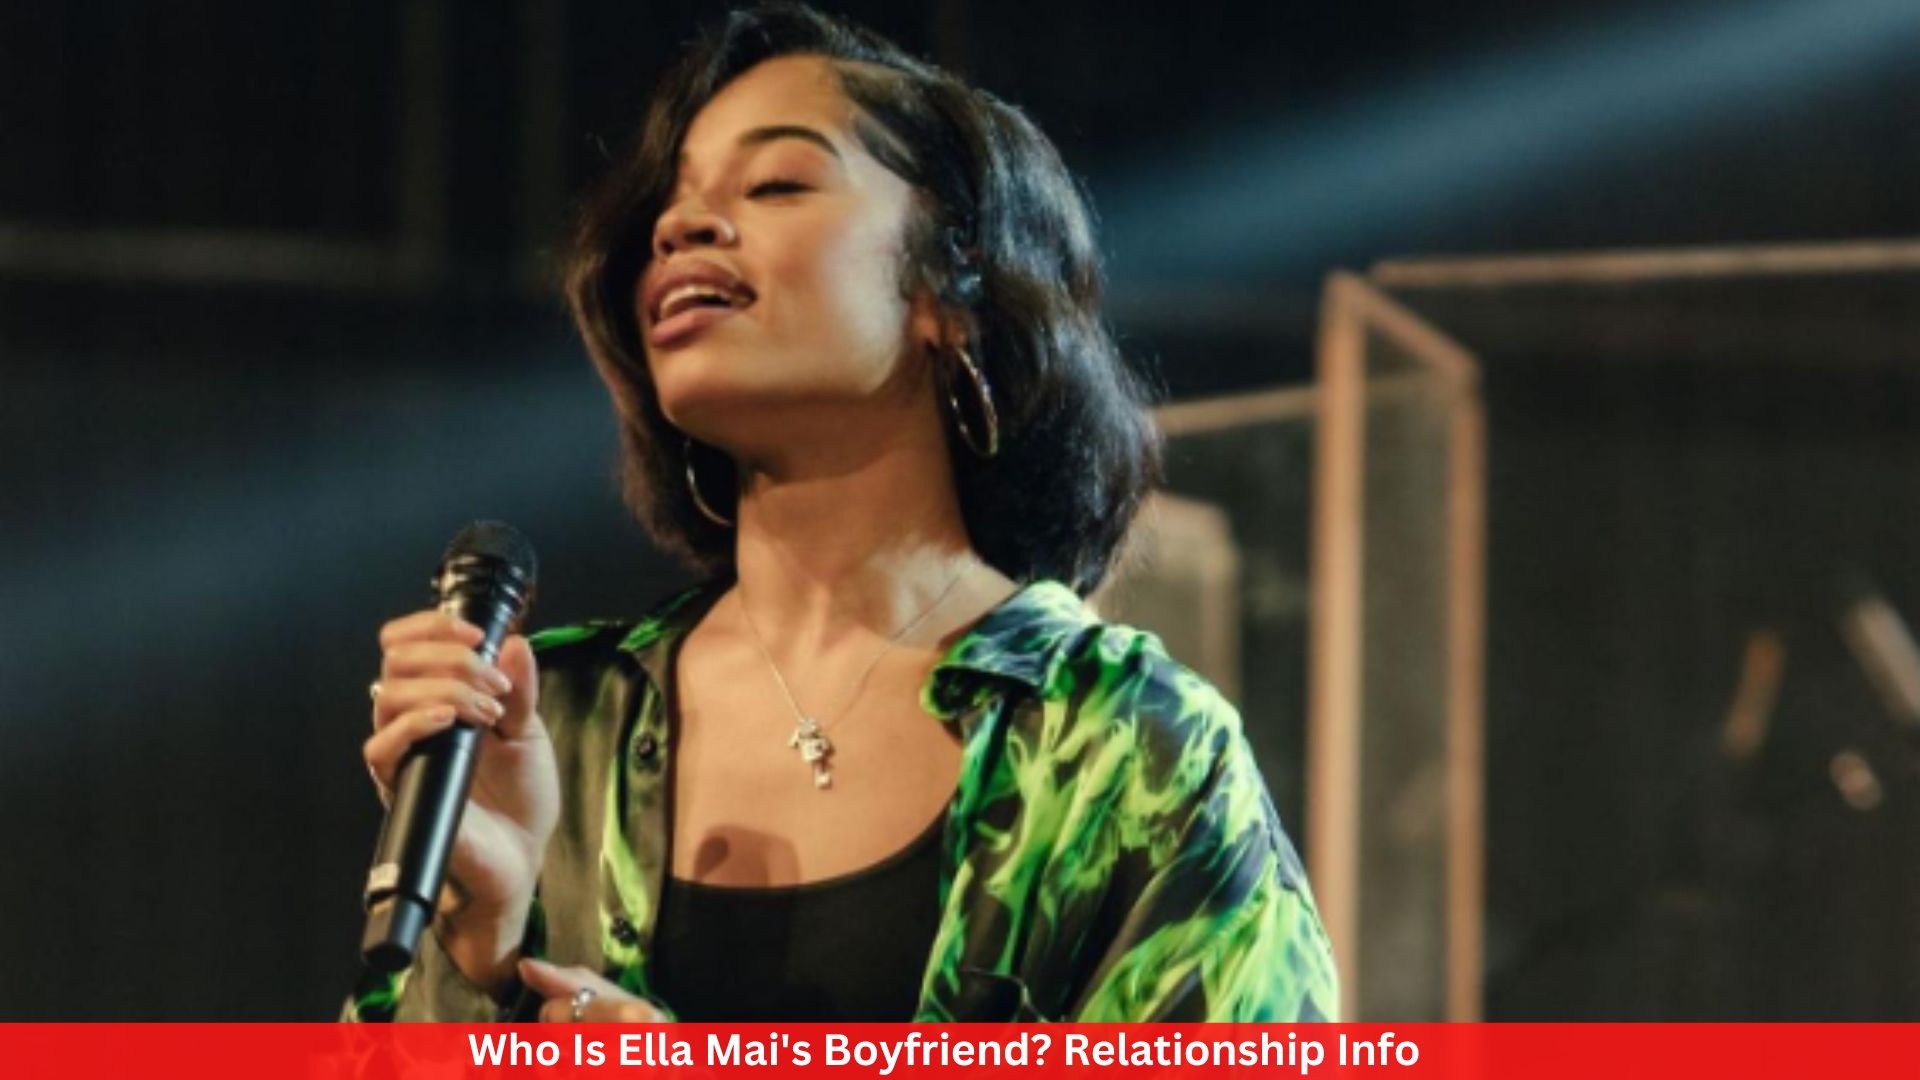 Who Is Ella Mai's Boyfriend? Relationship Info